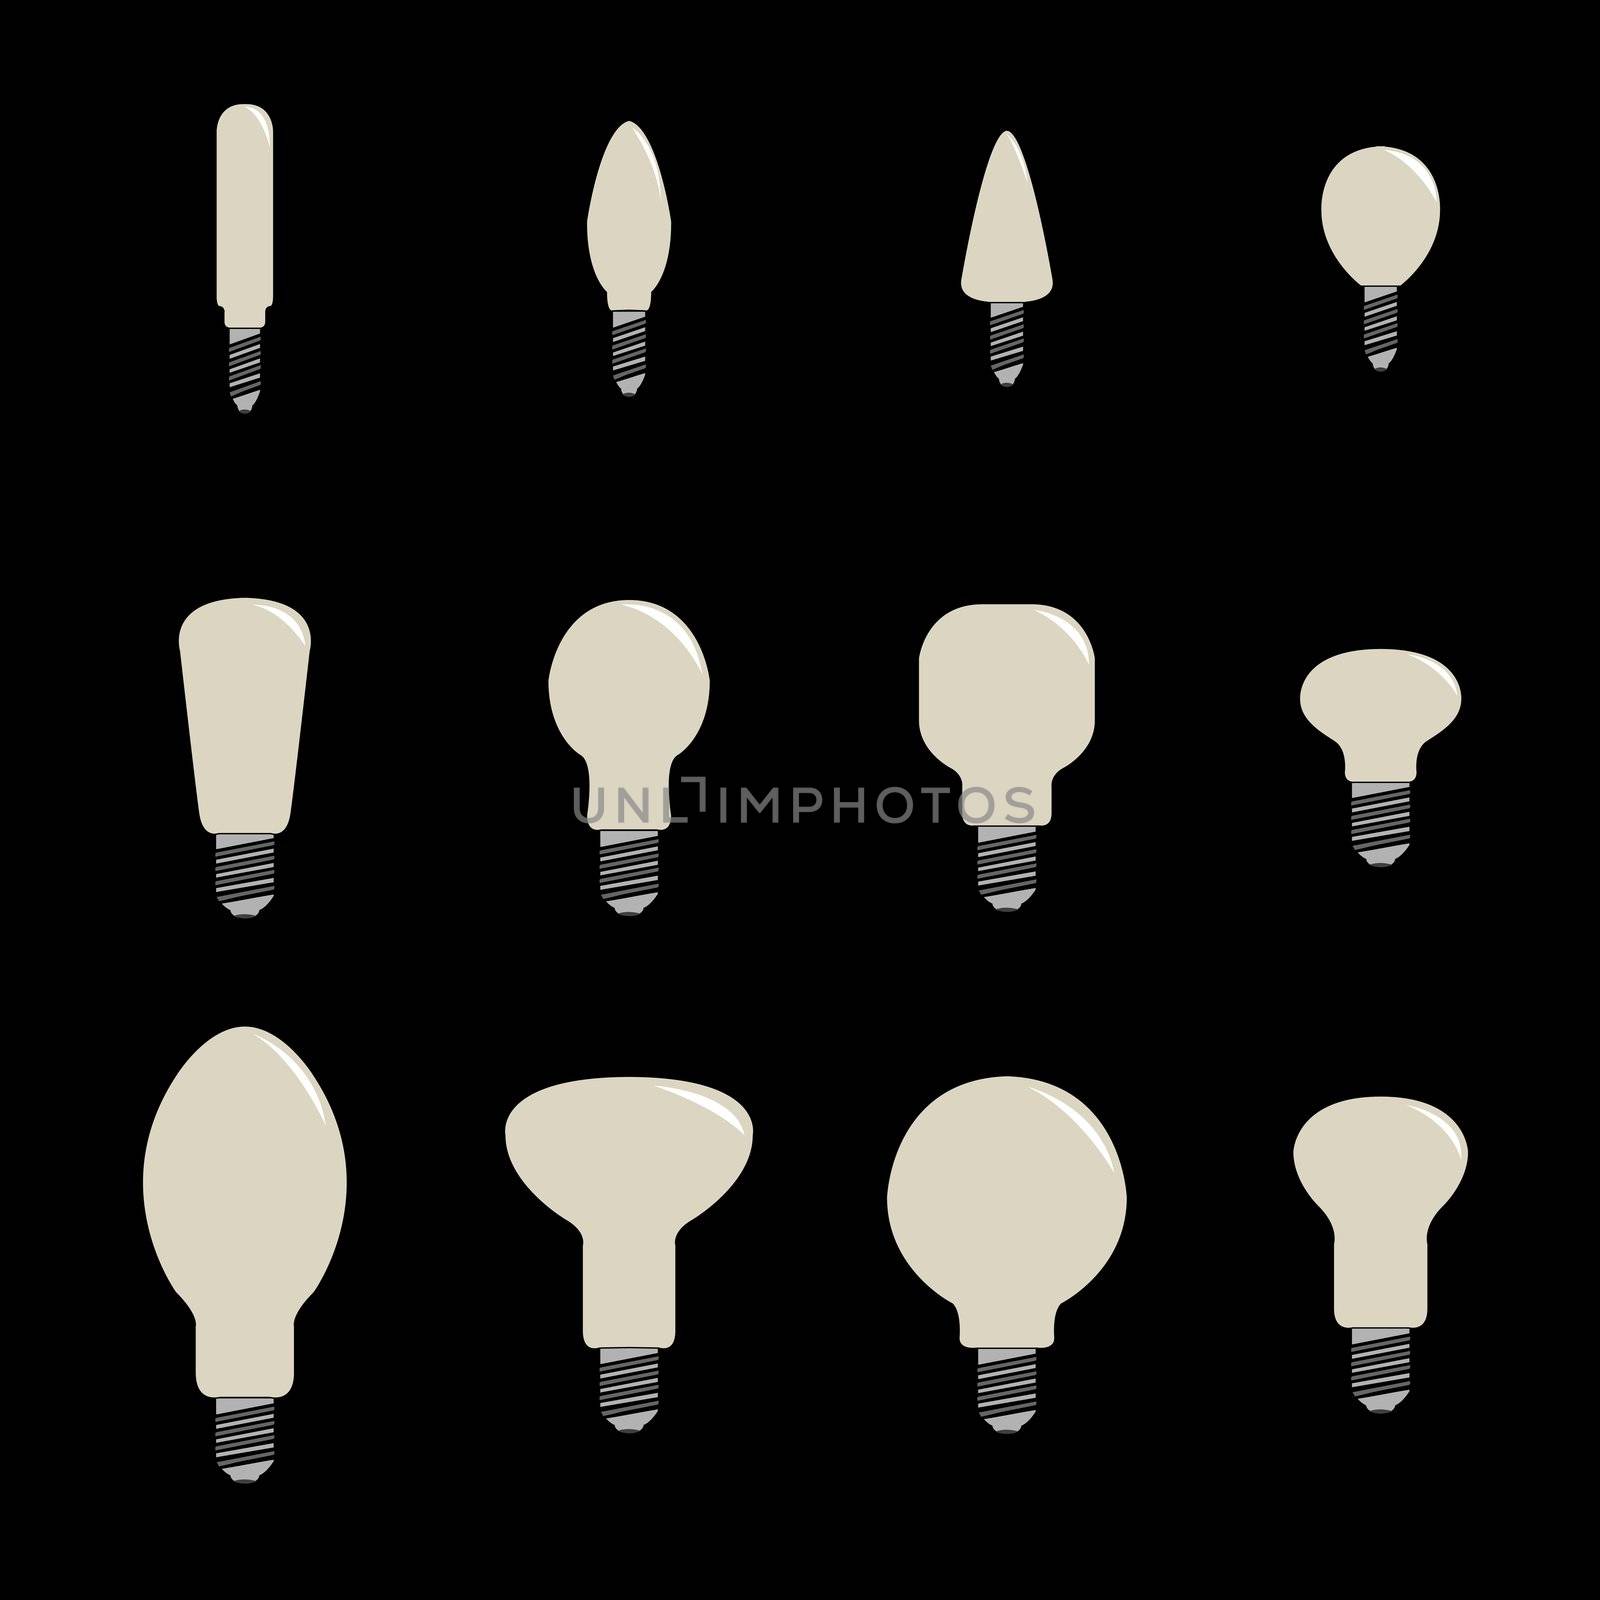 stylized light bulbs by robertosch